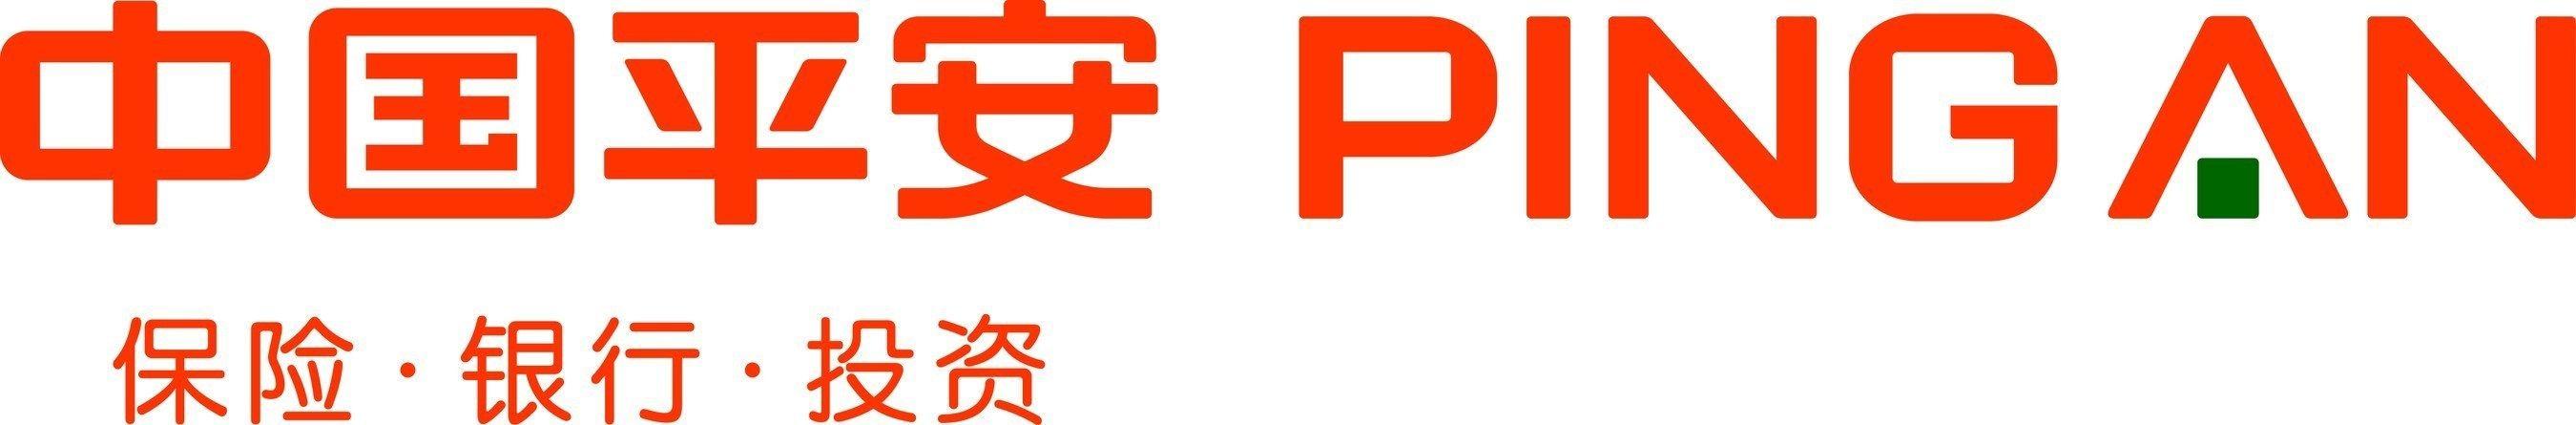 Pingan Logo - Suntech Partners with Munich Re and Ping An to Insure Its ...